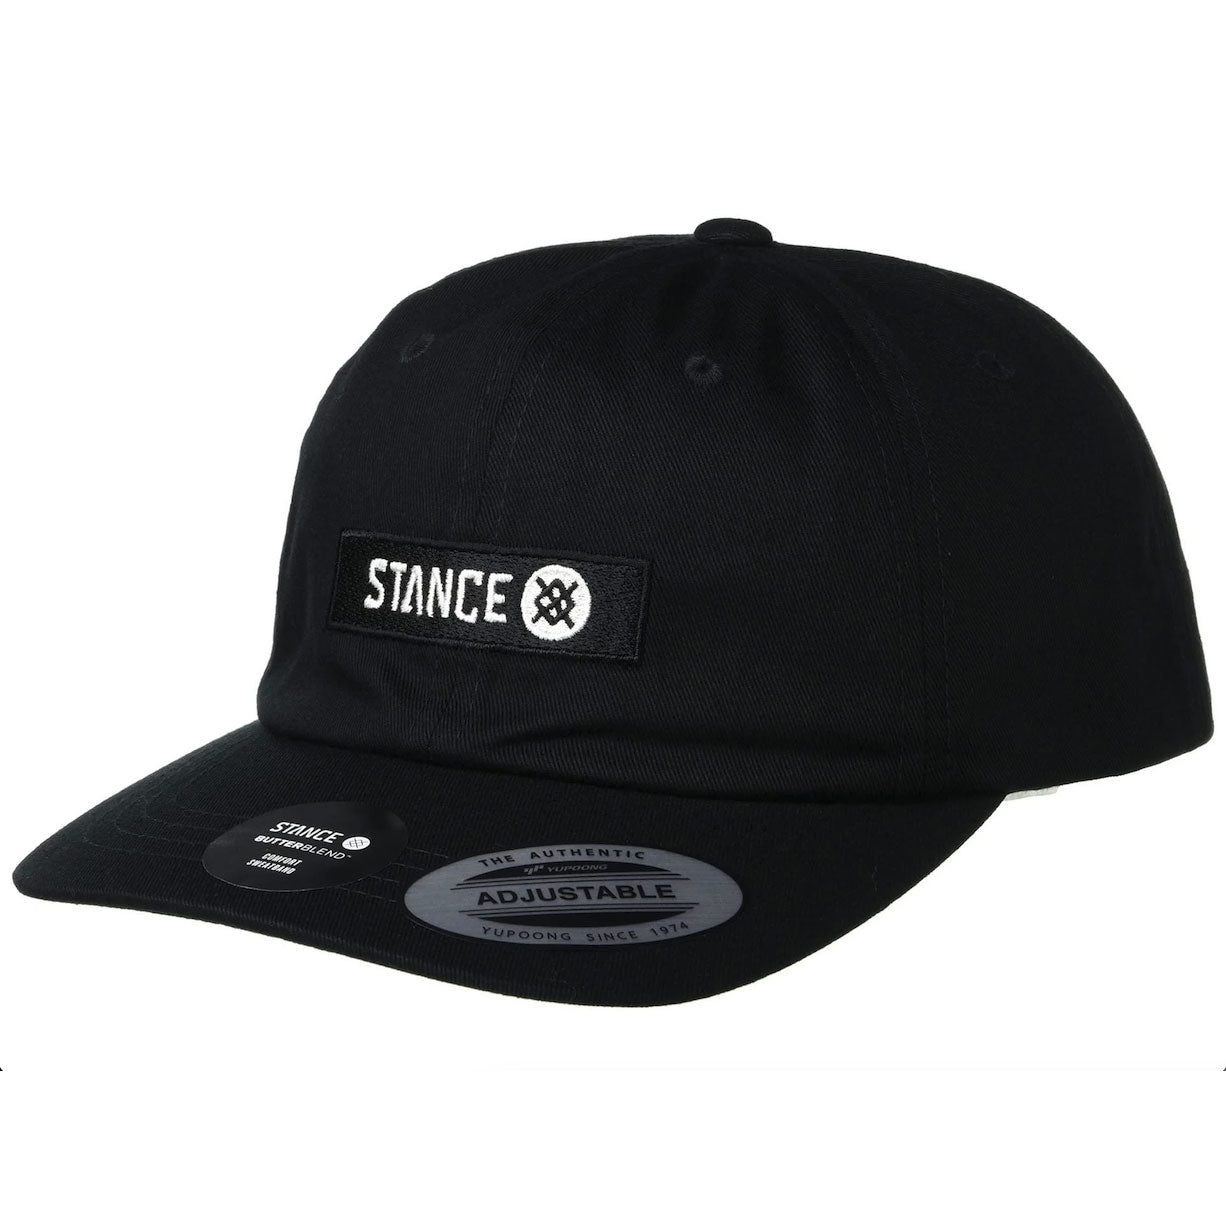 STANDARD ADJUSTABLE CAP Black